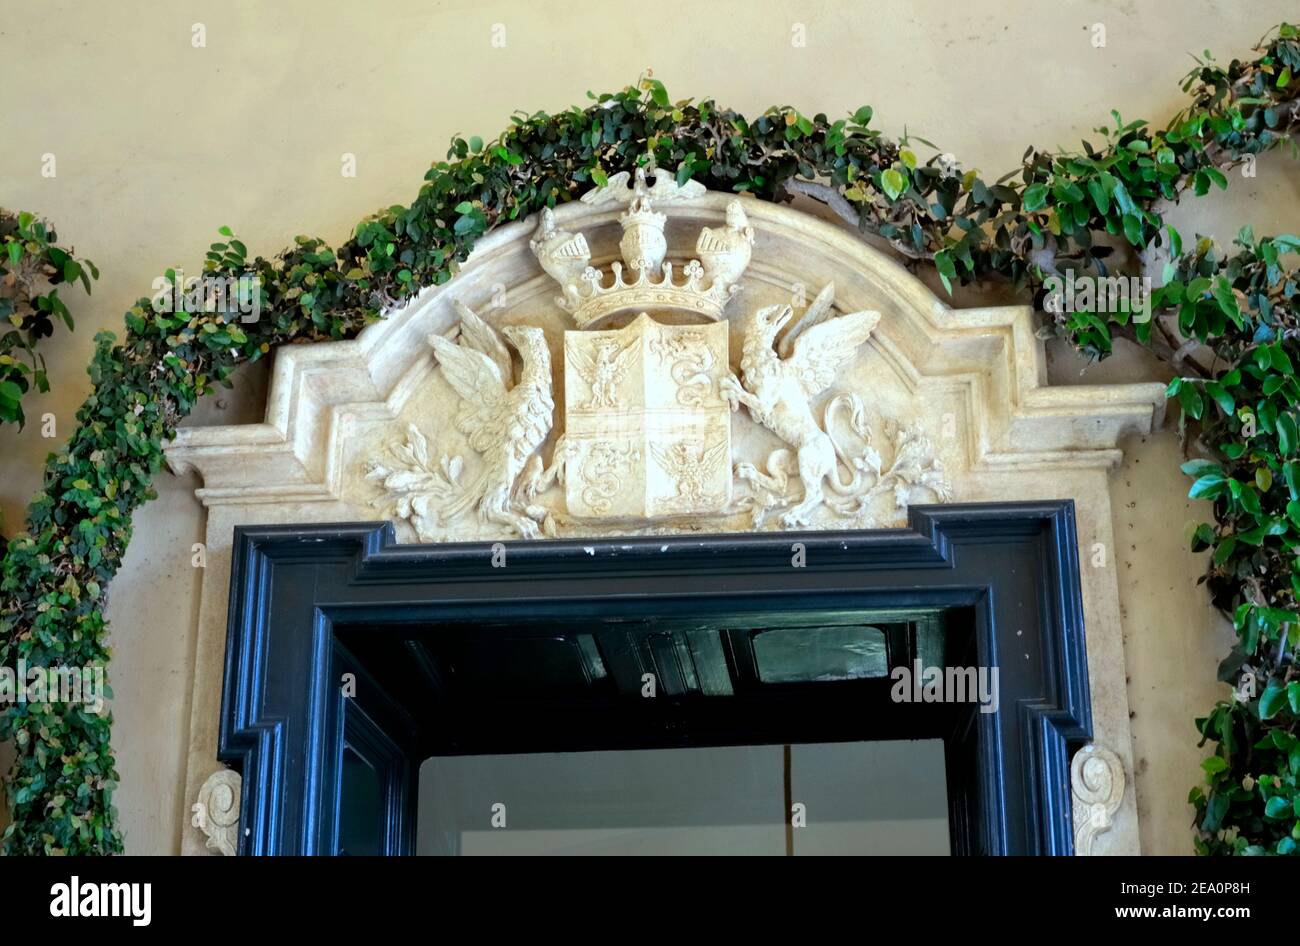 Decorative Door Header with the Crest at Villa del Balbianello Italy Stock Photo